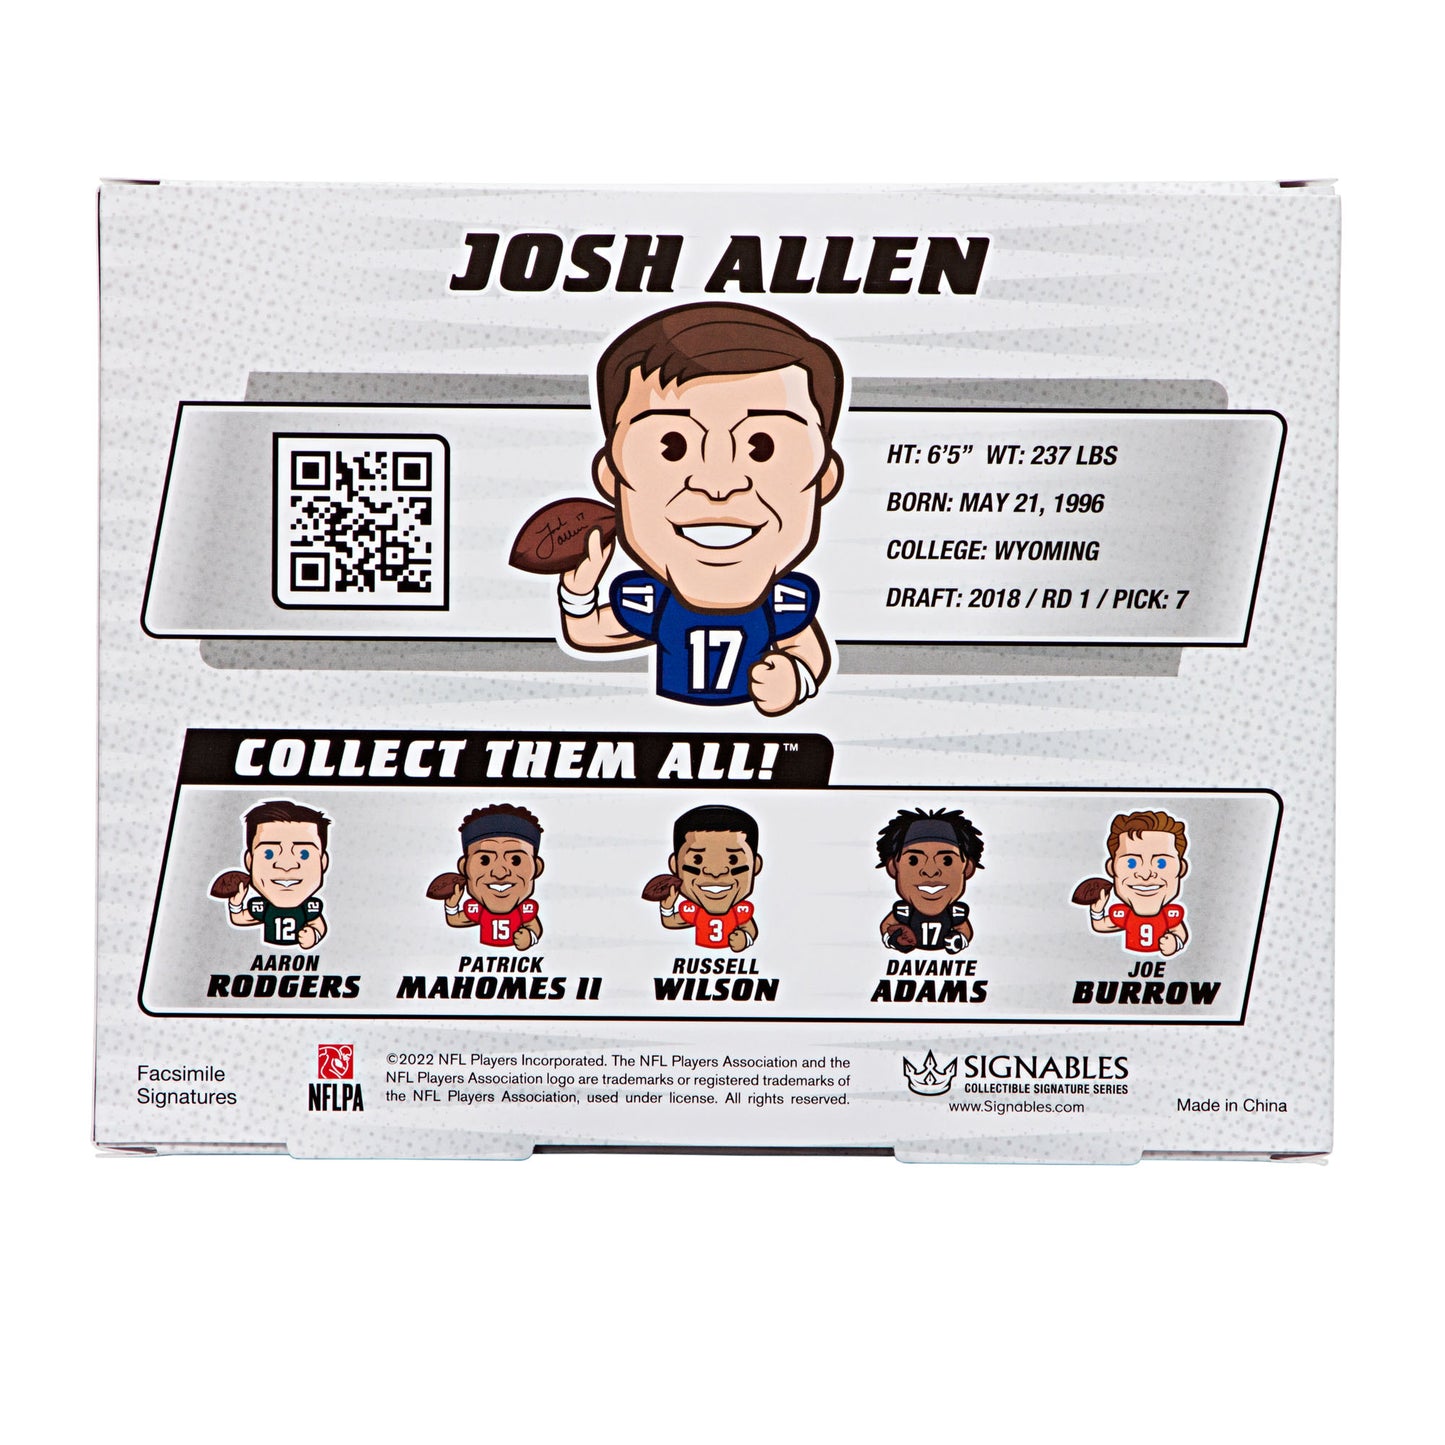 Josh Allen NFLPA Sports Collectible Digitally Signed